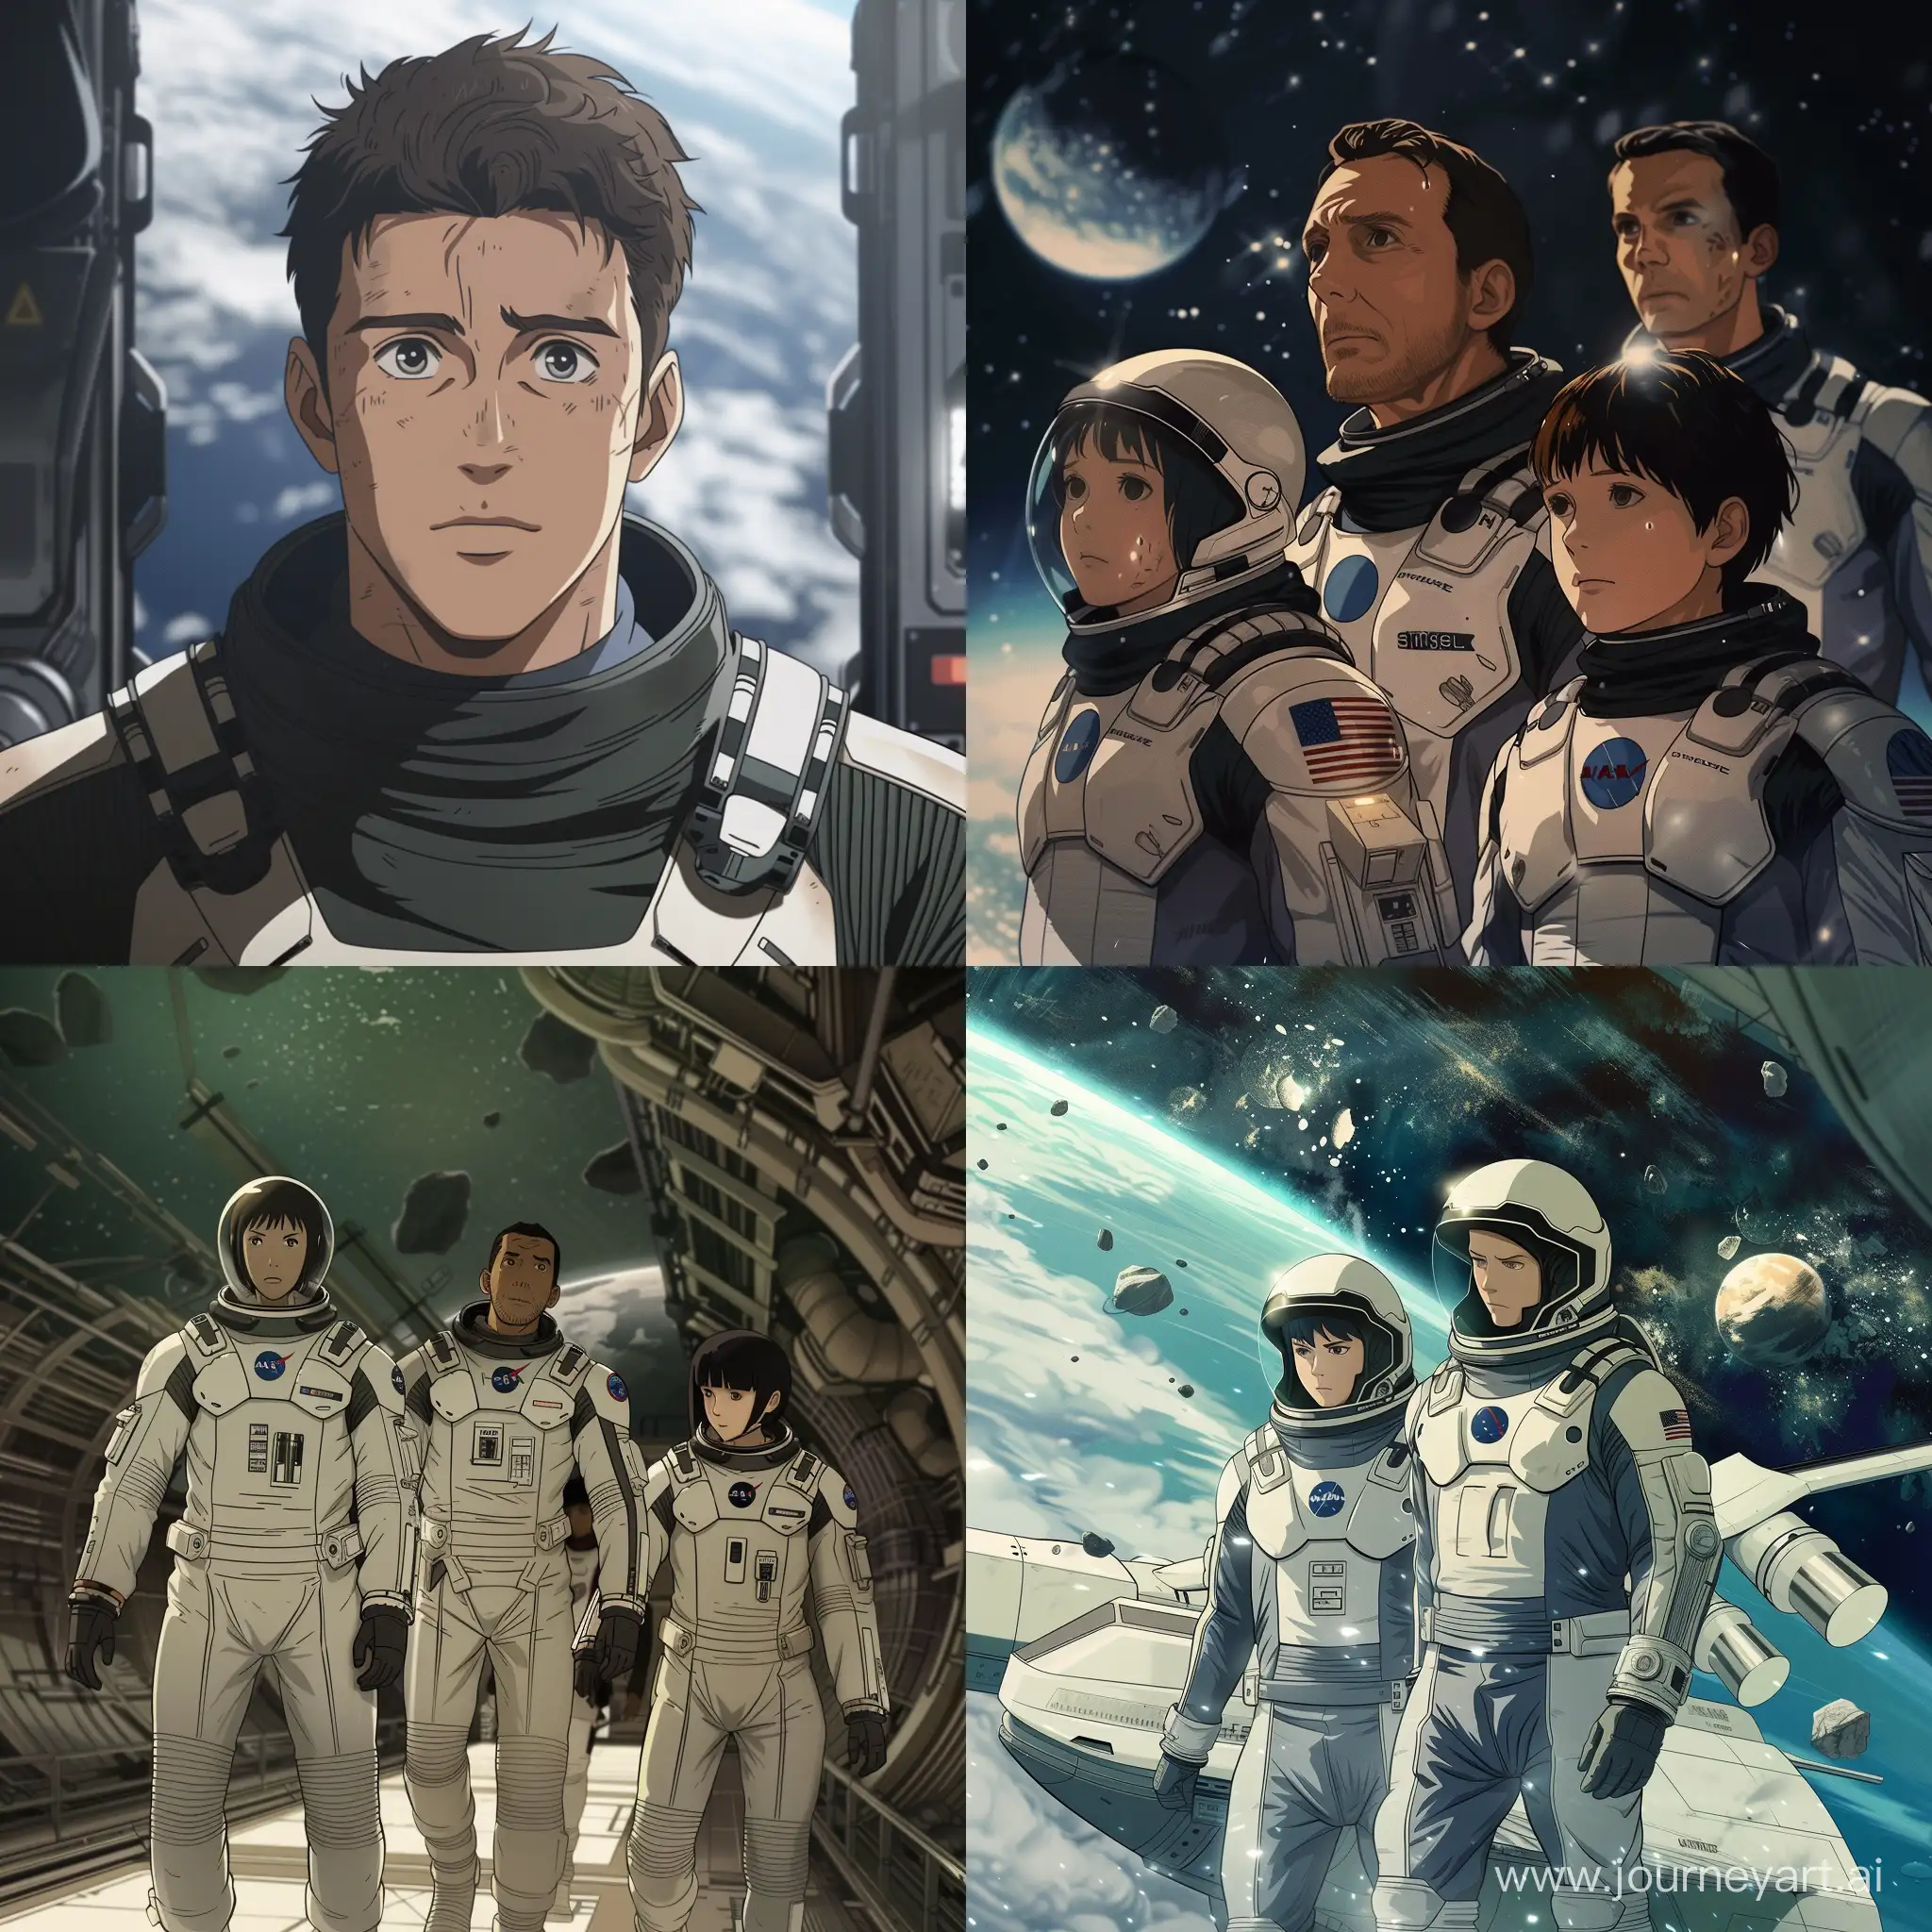 Japanese-Anime-Interpretation-of-Interstellar-Movie-Scene